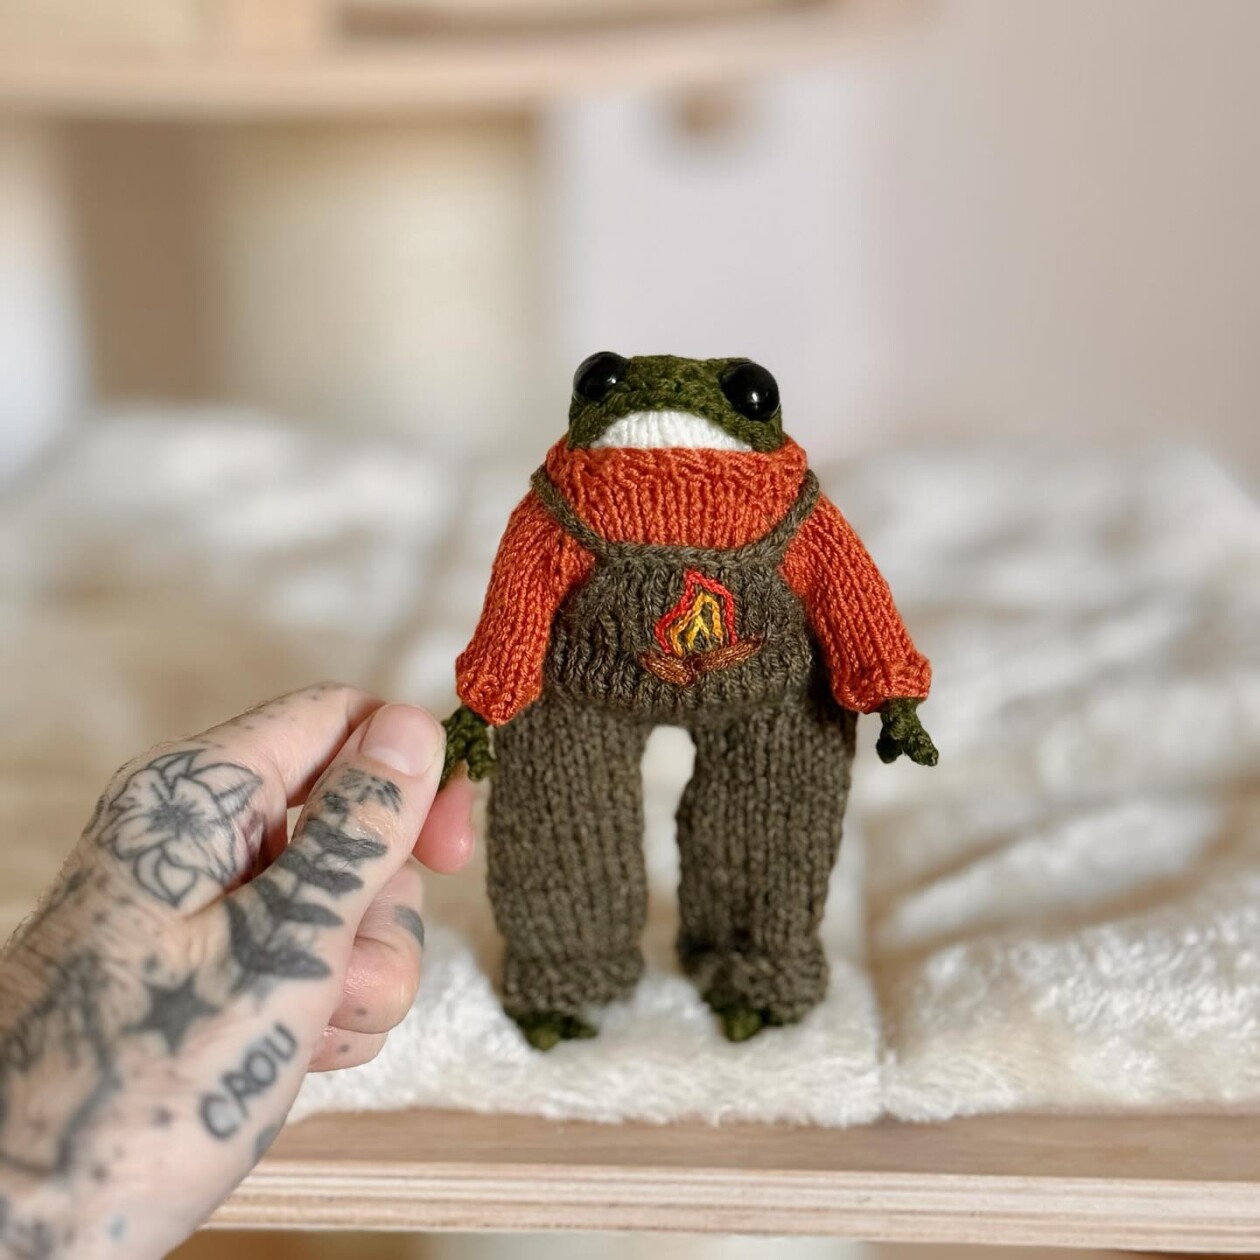 Enchanting Anthropomorphized Frog Crochet Patterns By Elliot (5)